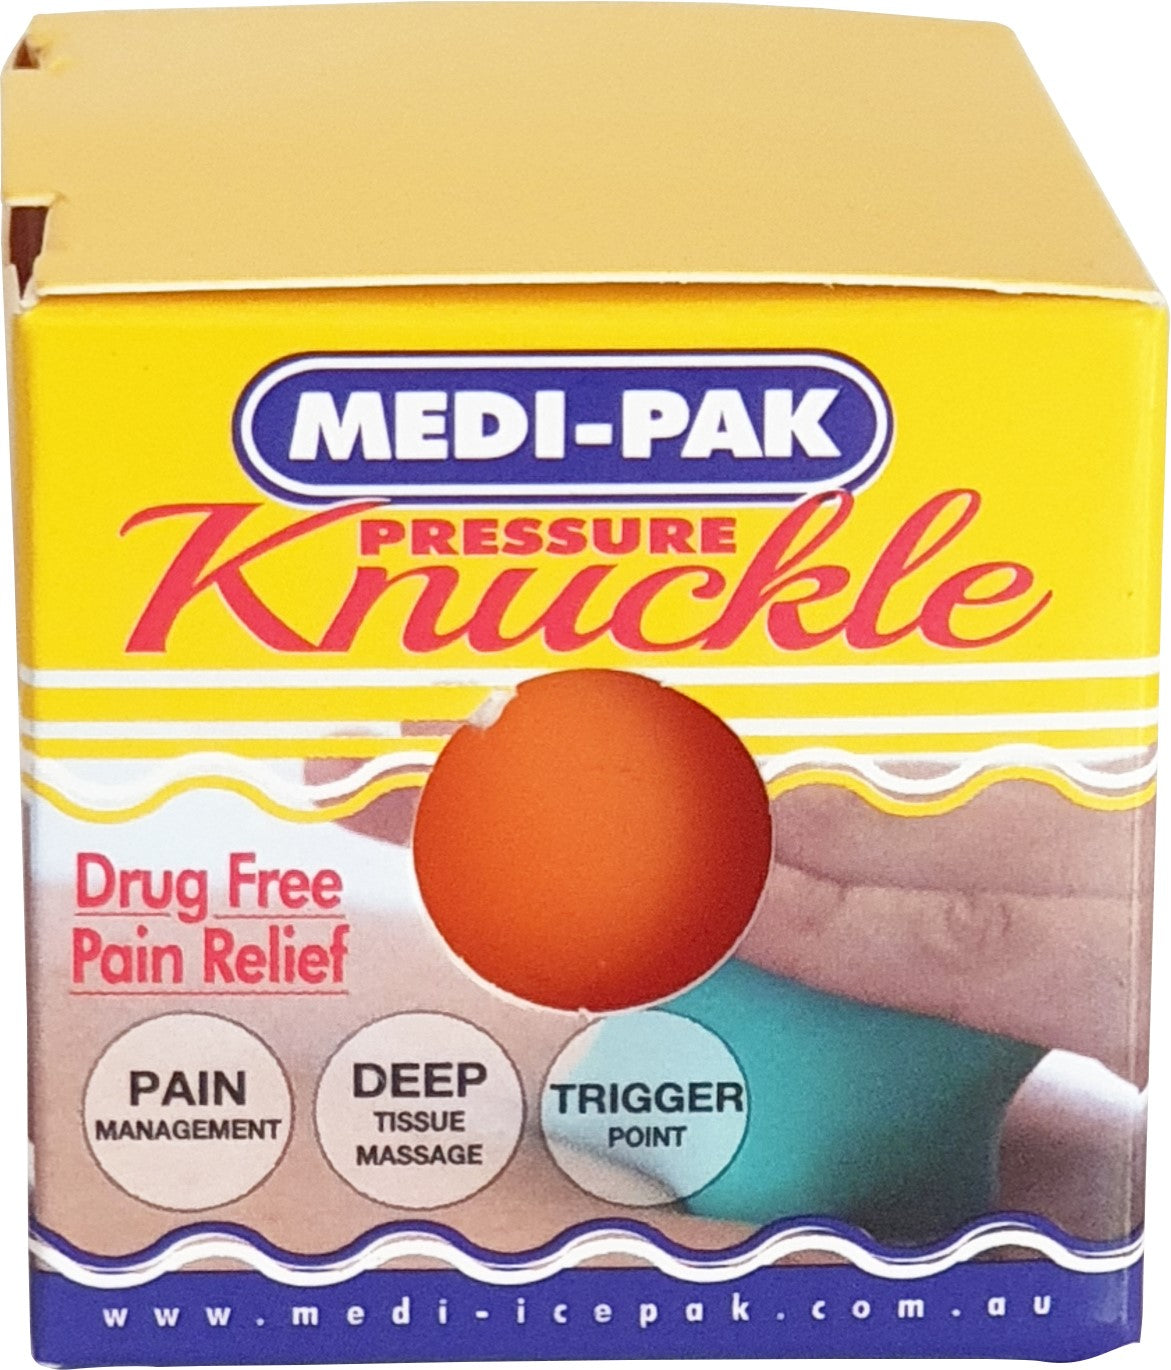 Medi-Pak Pressure Knuckle